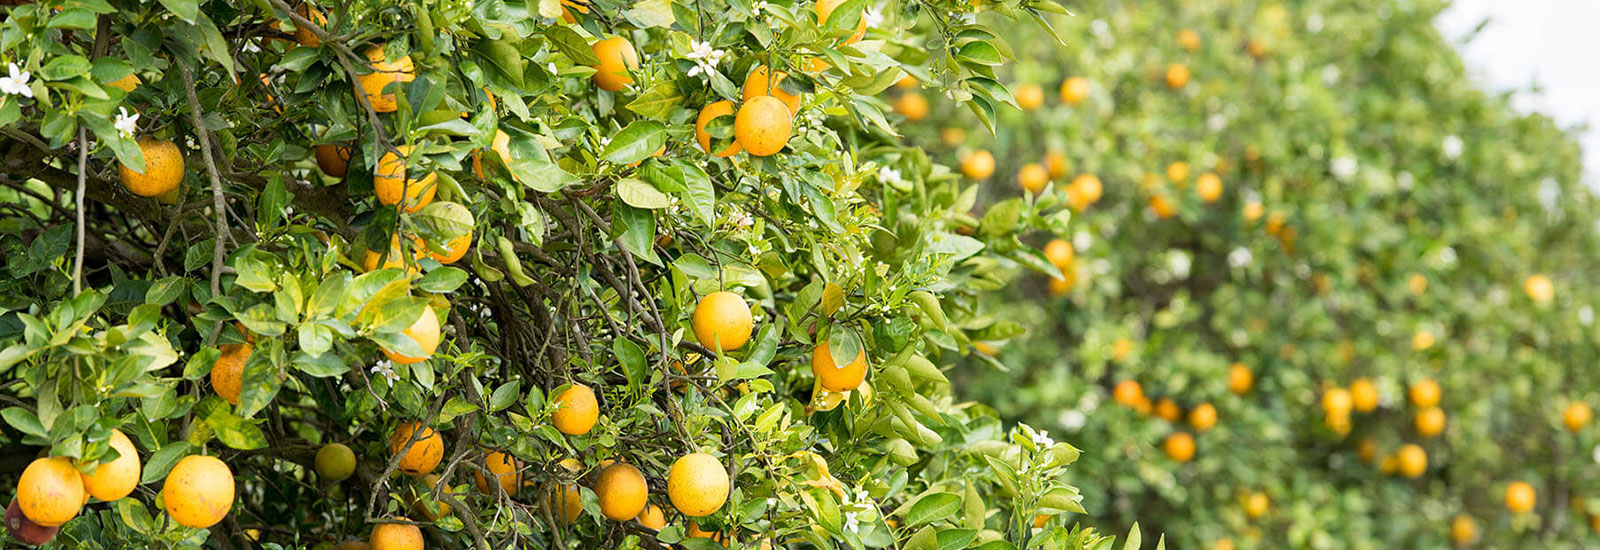 CLas Inhibition with Antisense Oligonucleotides for Management of Citrus Greening Disease